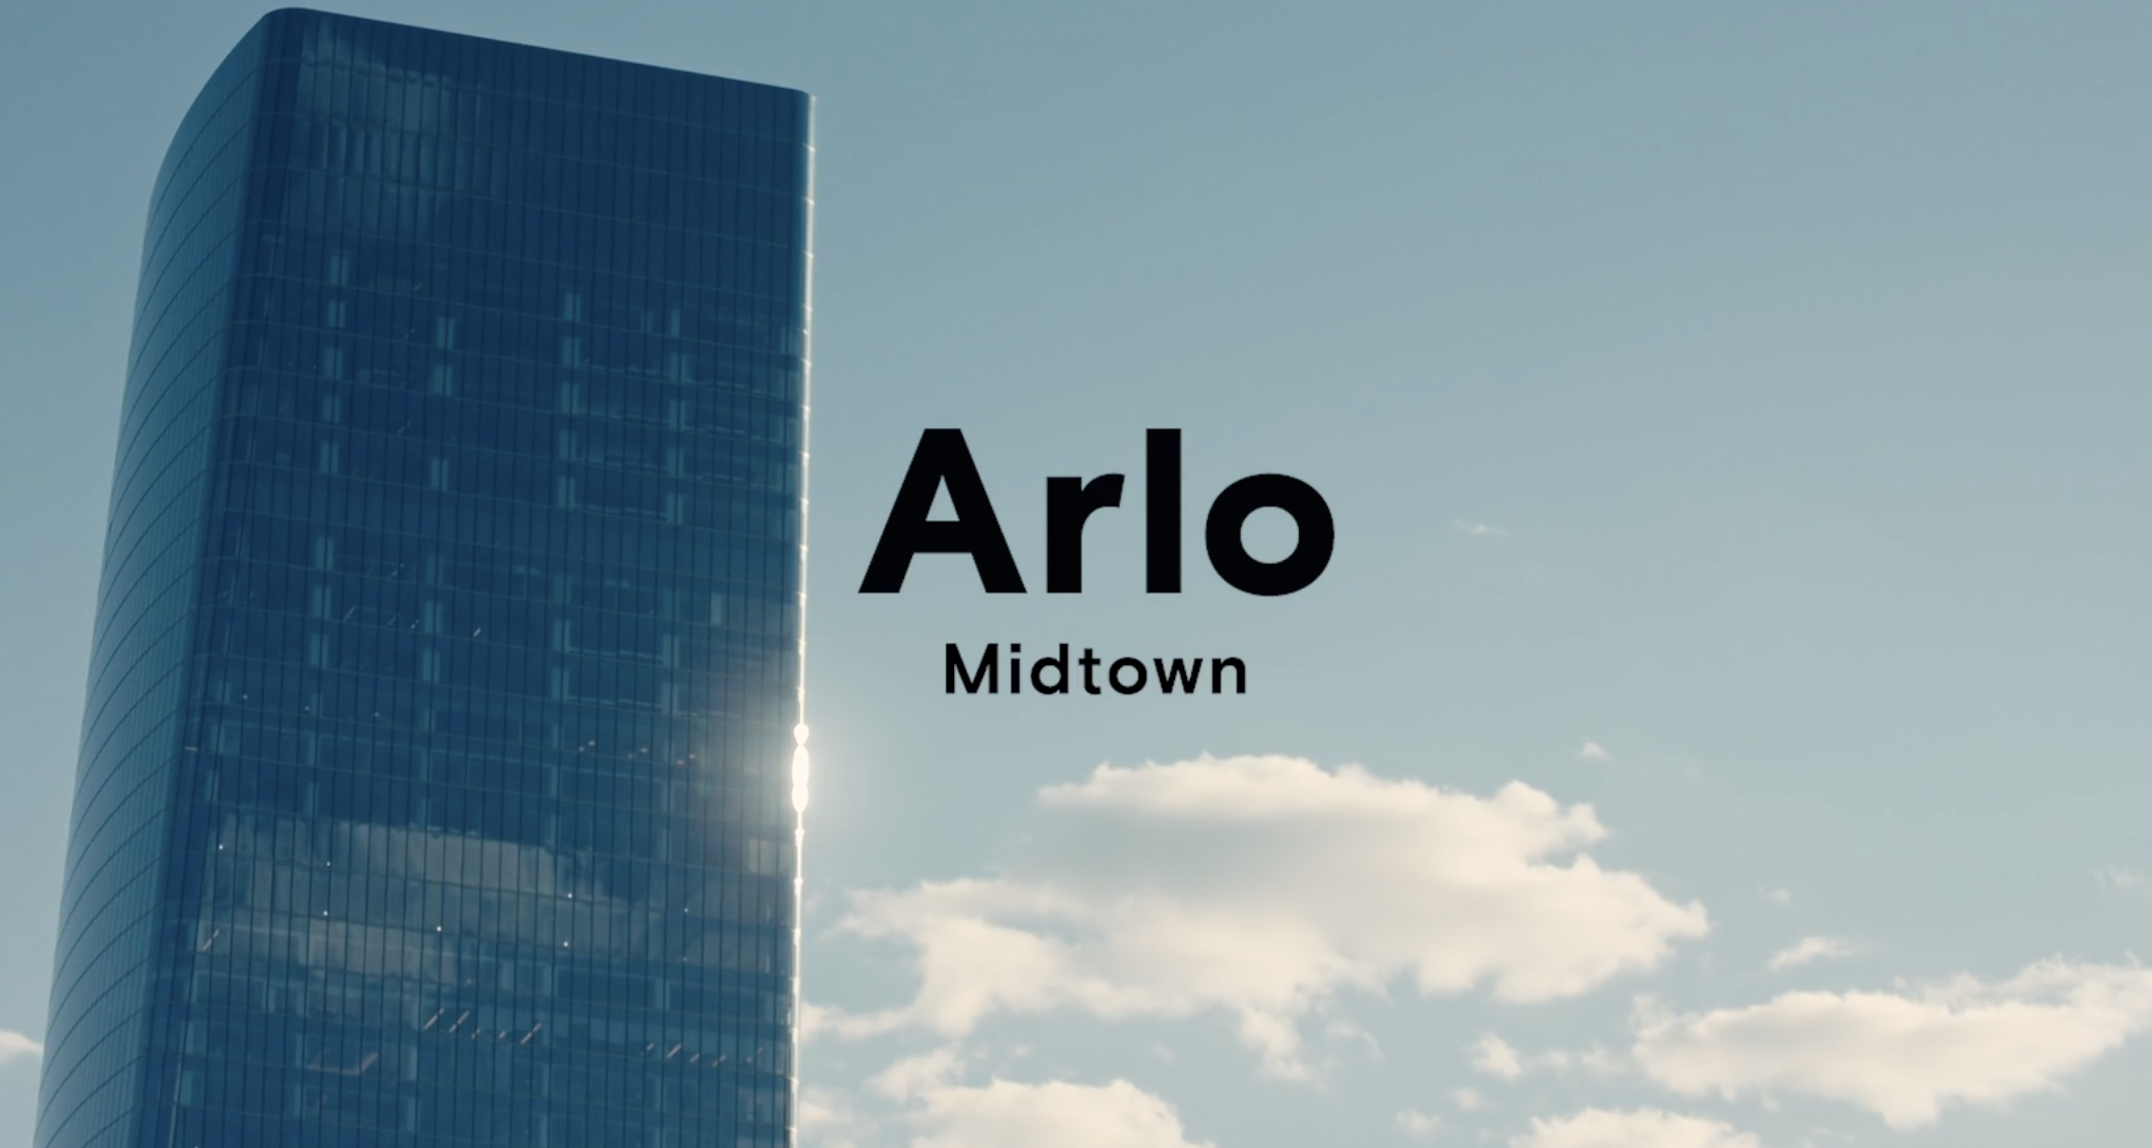 Arlo Midtown|https://vimeo.com/736259290/461f3f0fbb